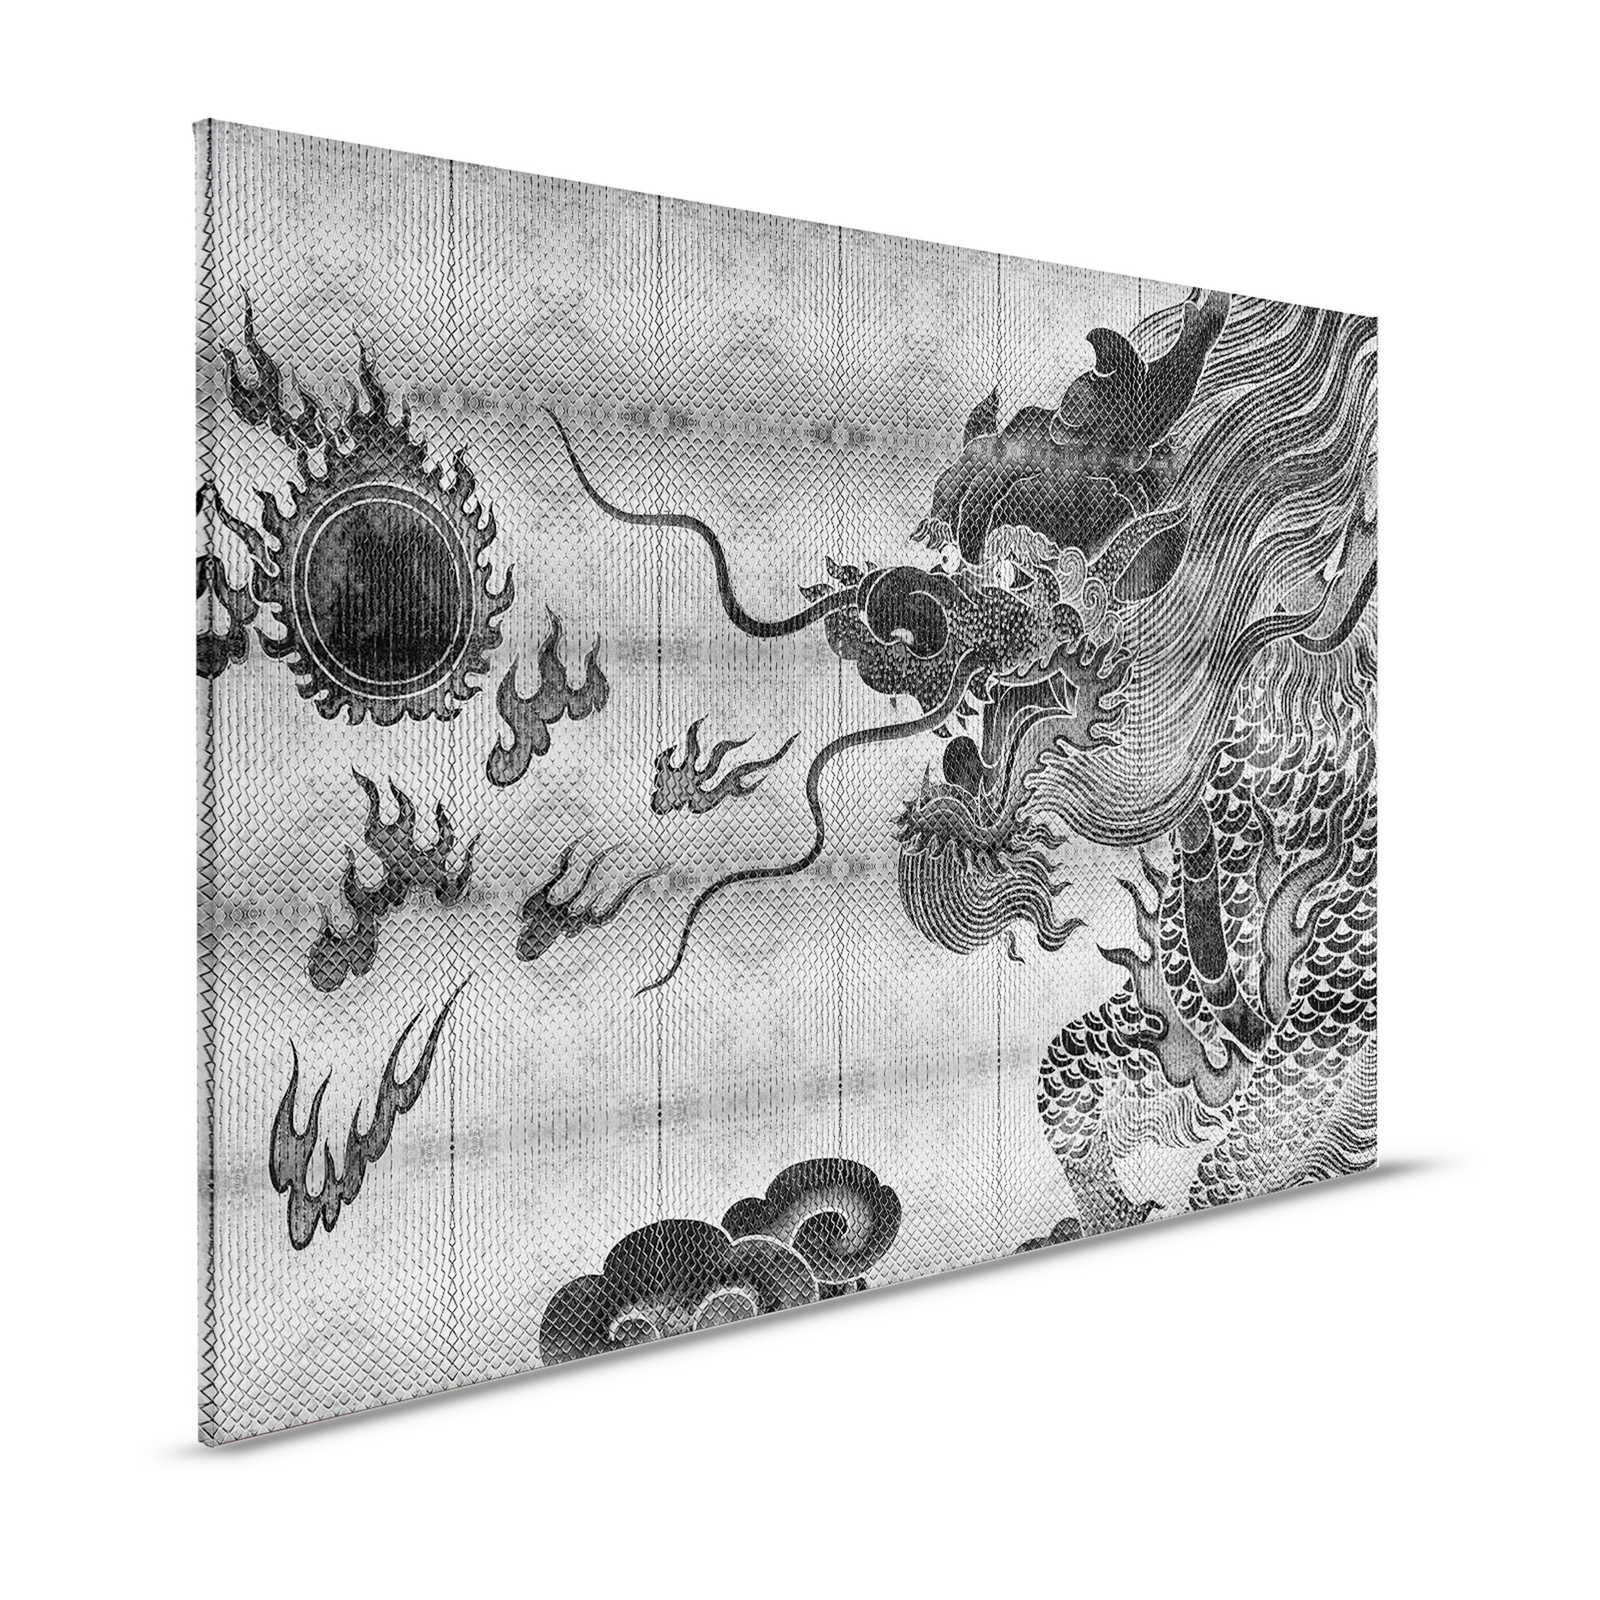 Shenzen 3 - Dragon Canvas Painting Metallic Silver Asian Style - 1.20 m x 0.80 m
